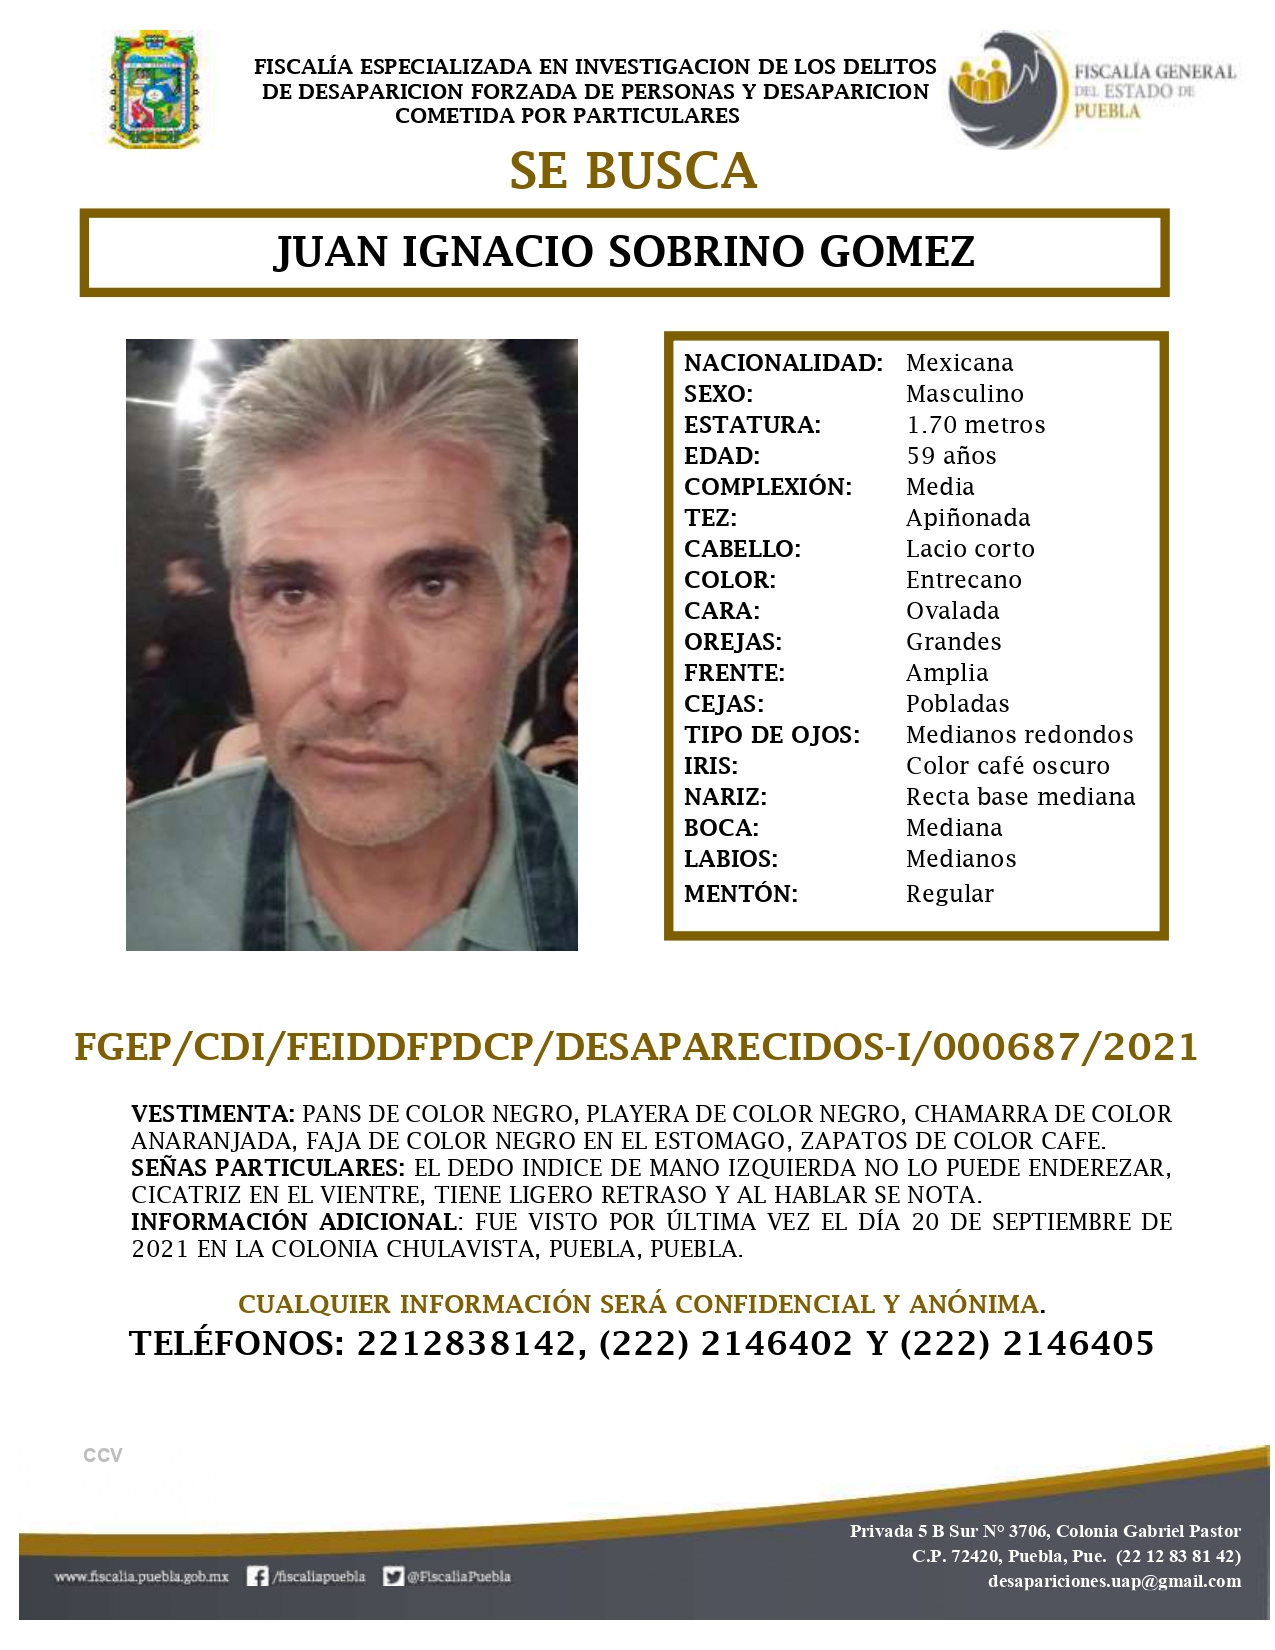 Servicio Social Juan Ignacio Sobrino Gómez